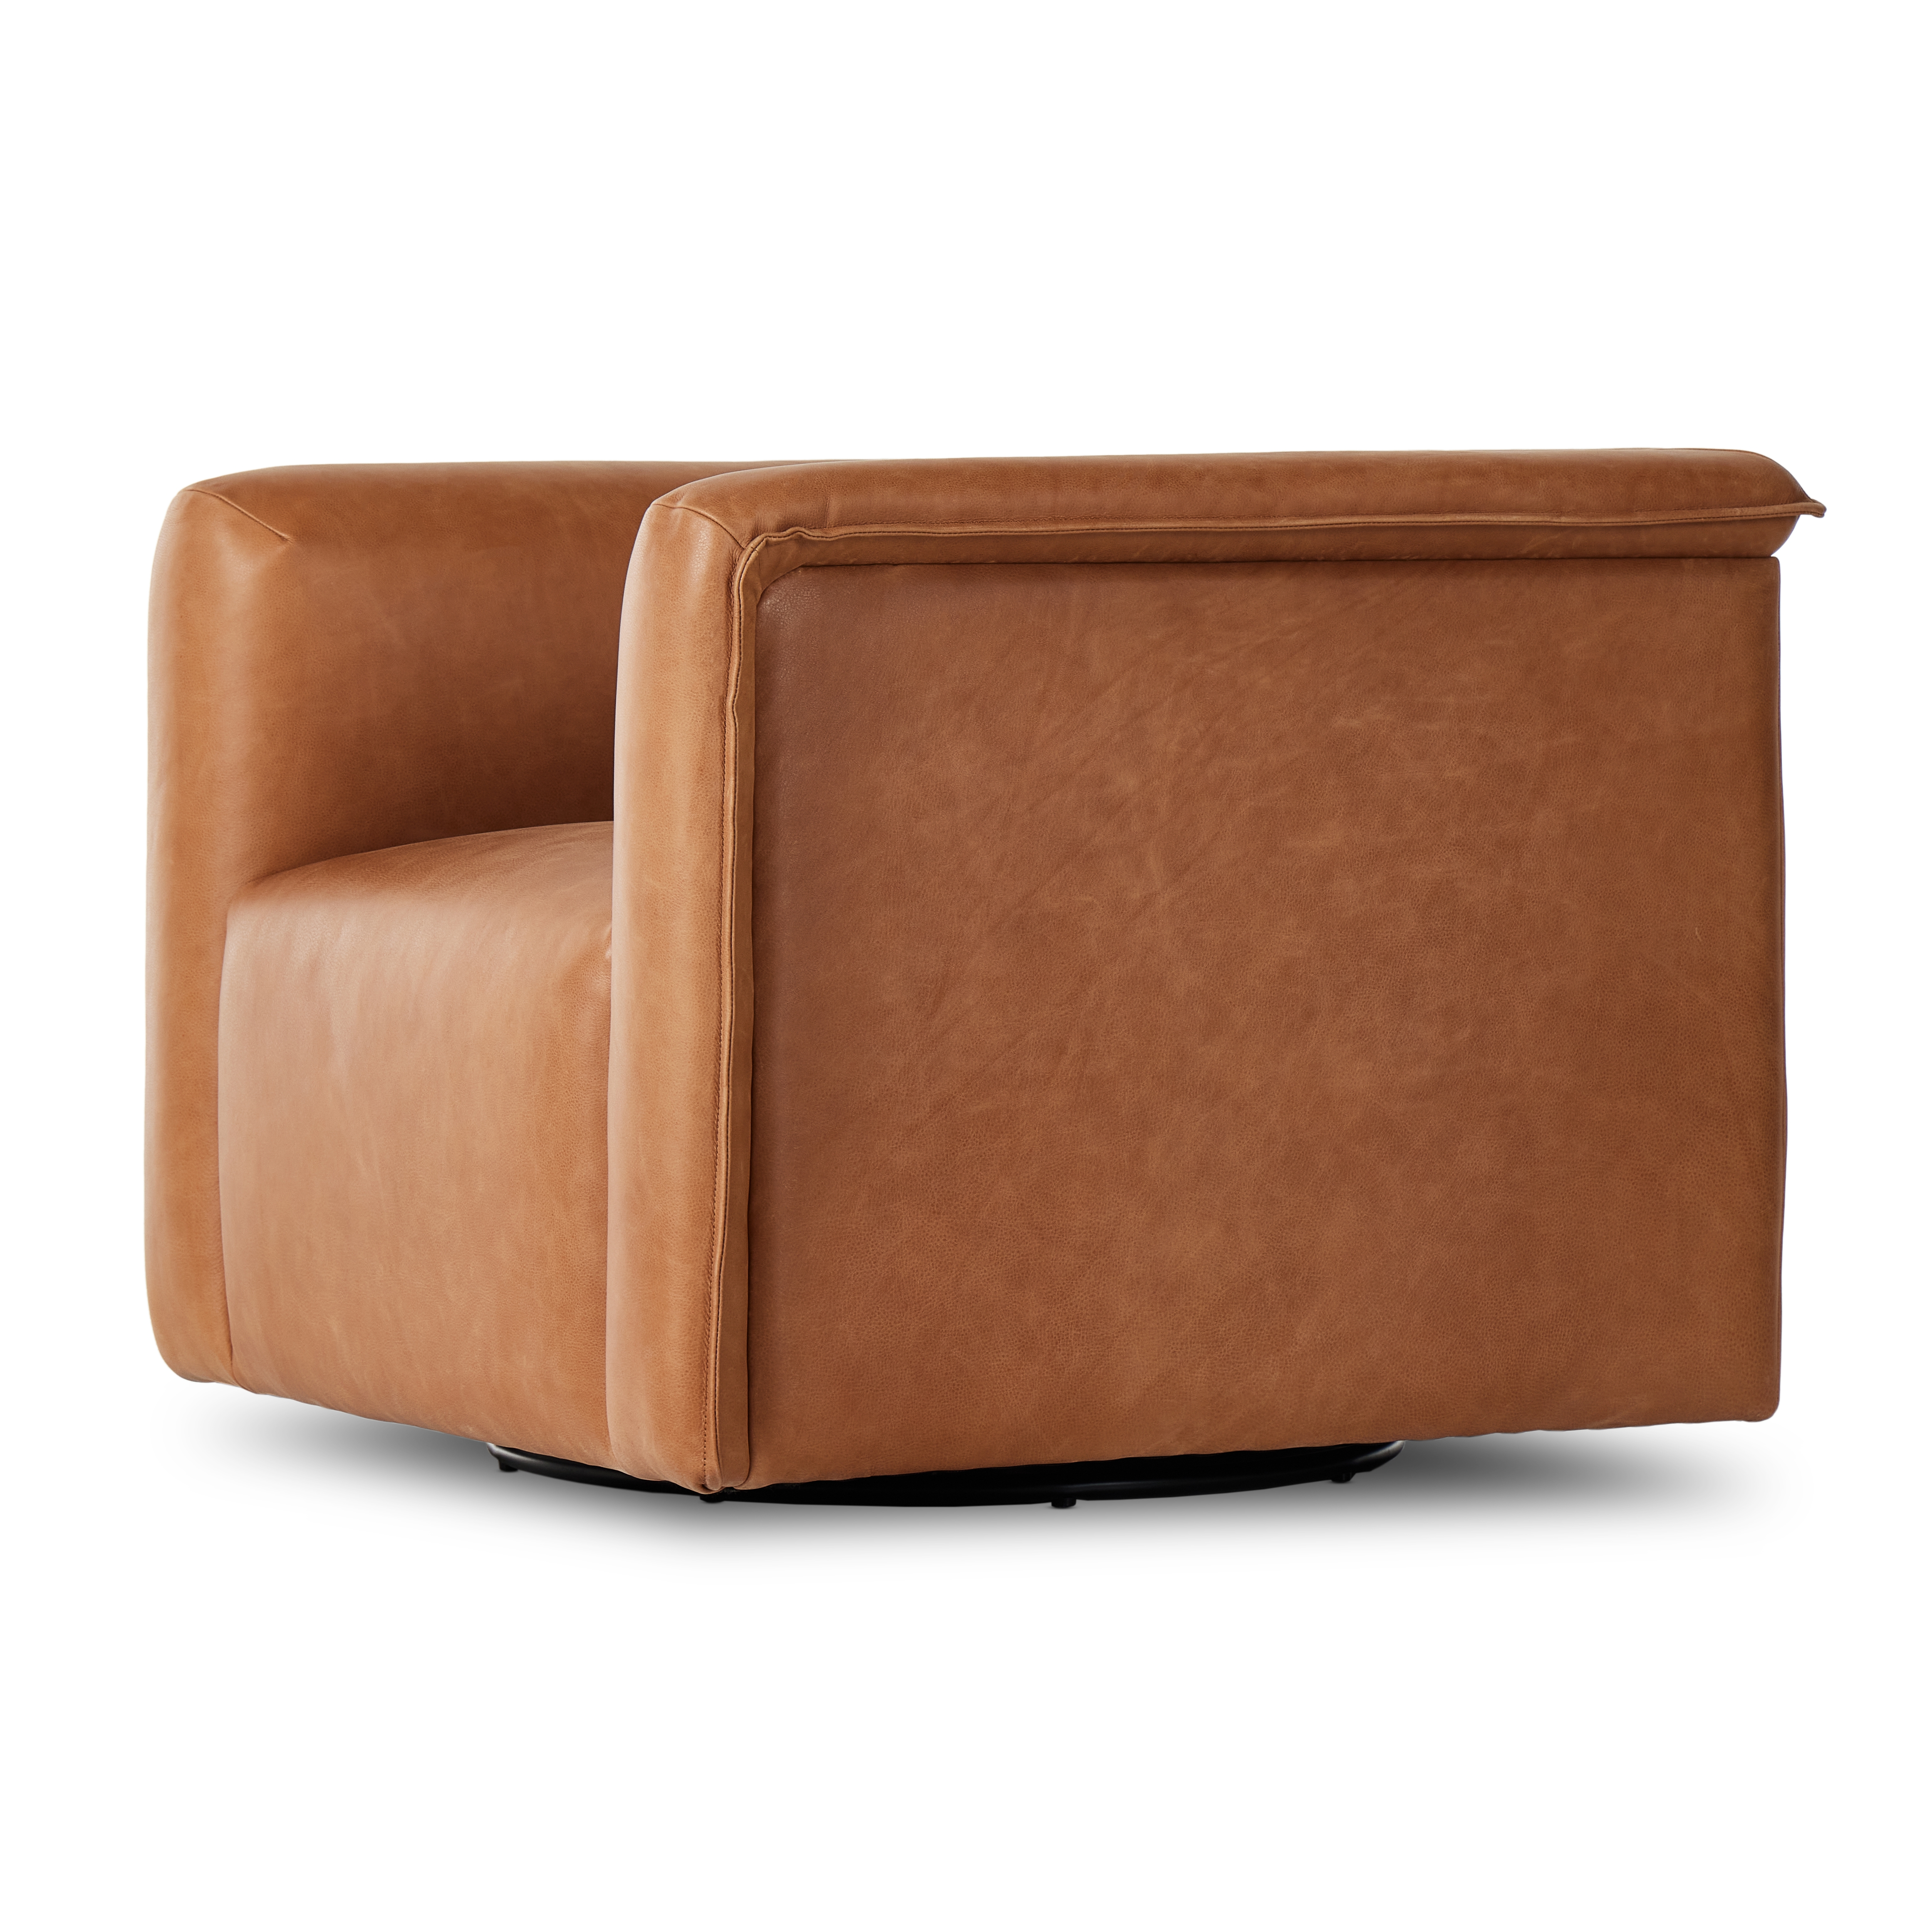 Wellborn Swivel Chair-Palermo Cognac - Image 2